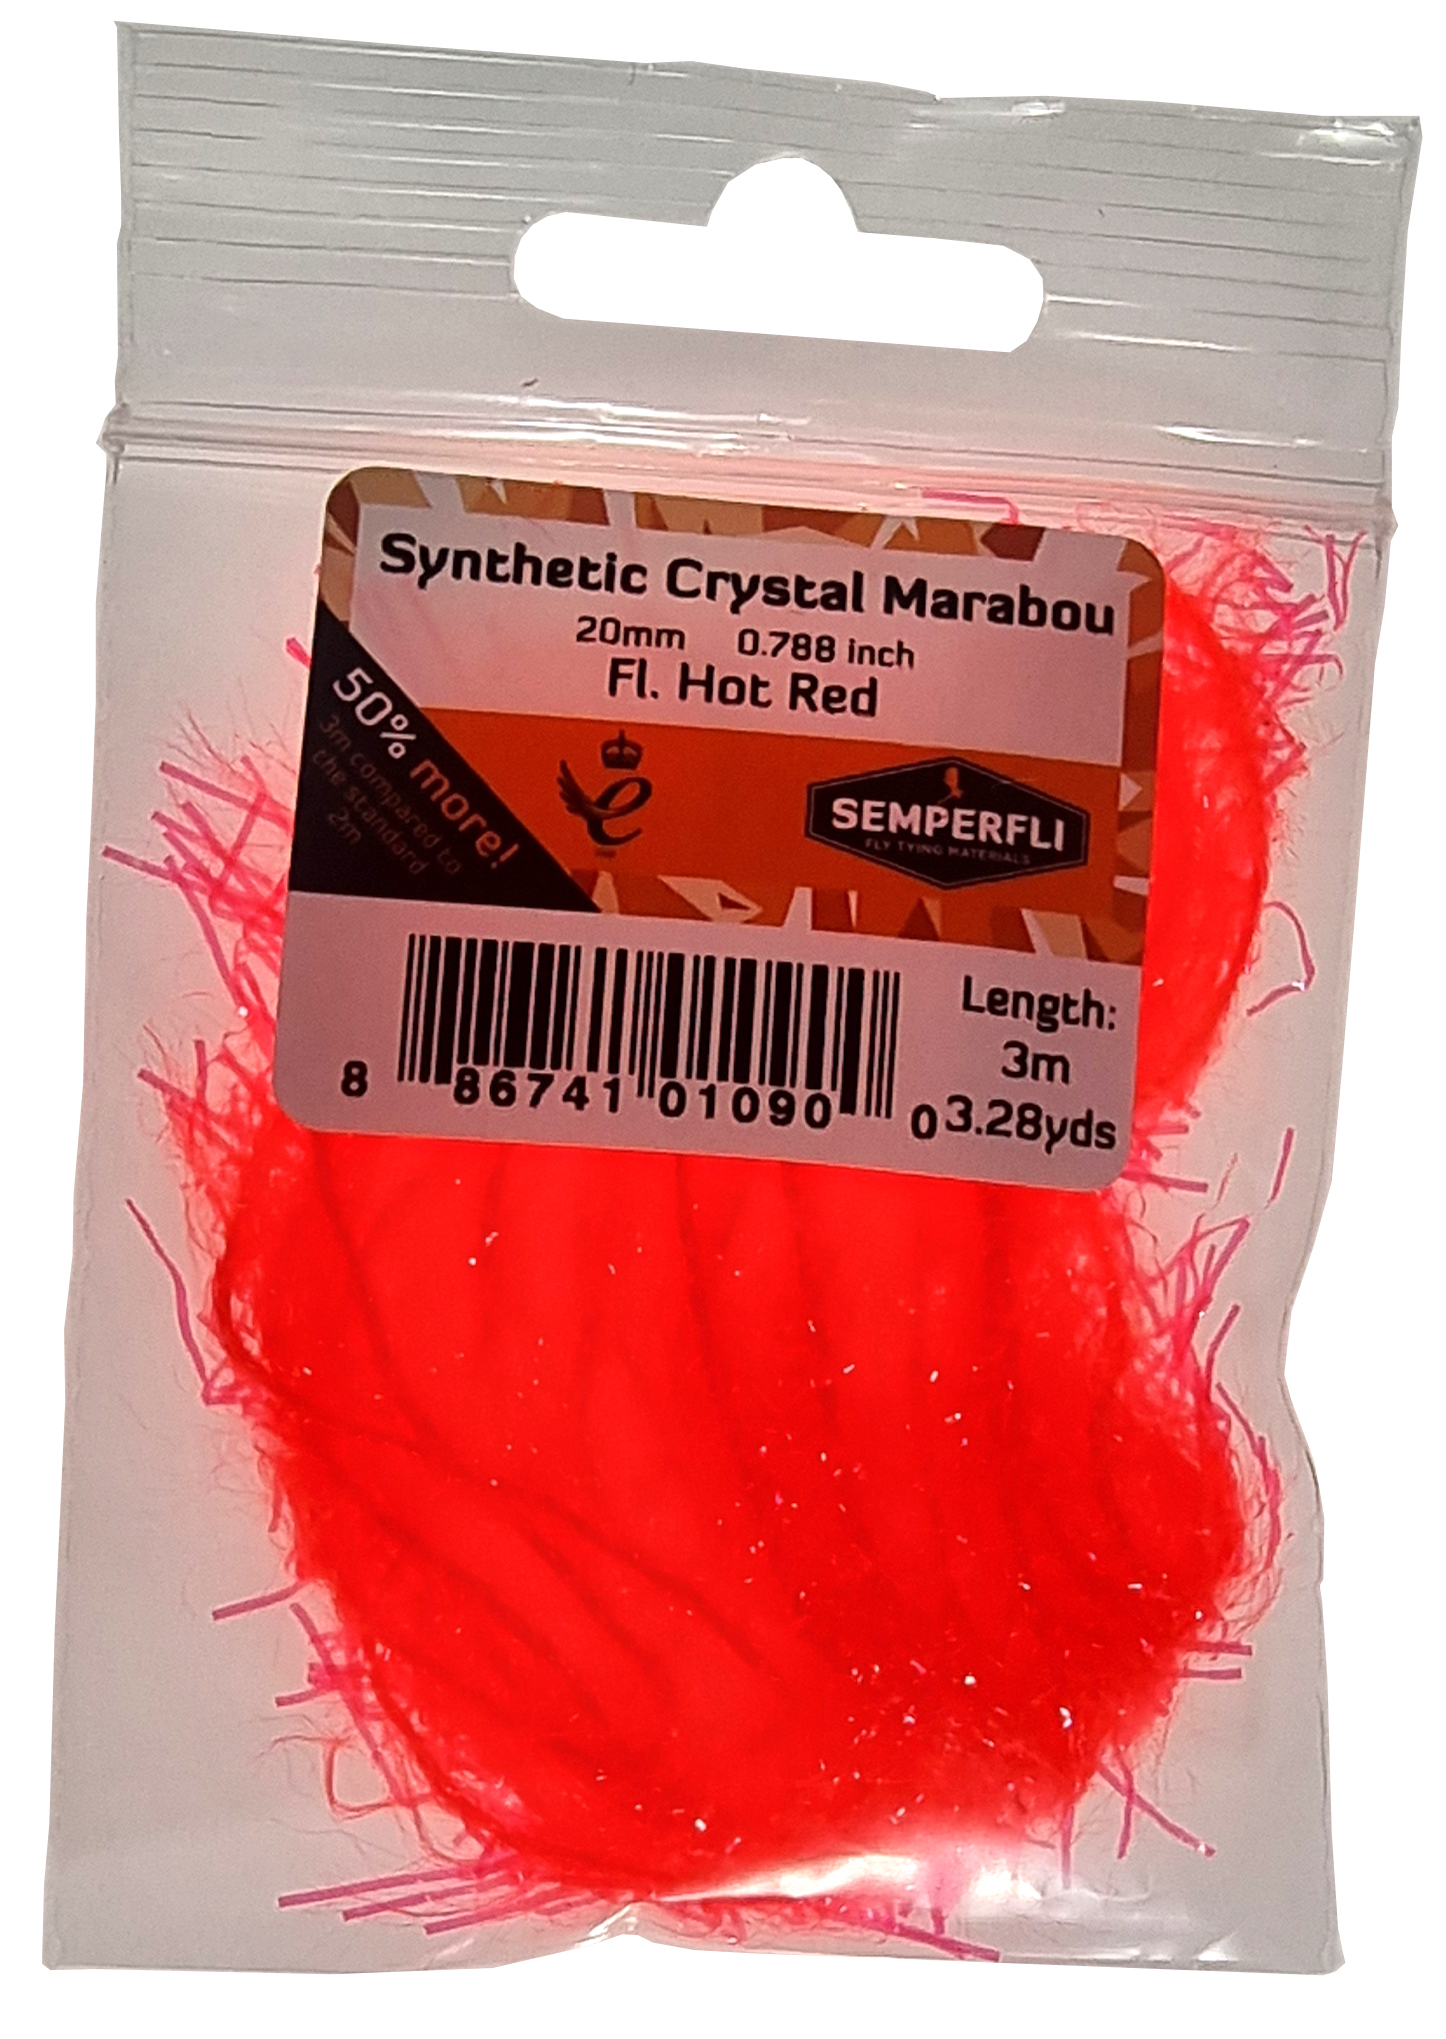 Semperfli Synthetic Crystal Marabou 20mm Fl Hot Red 